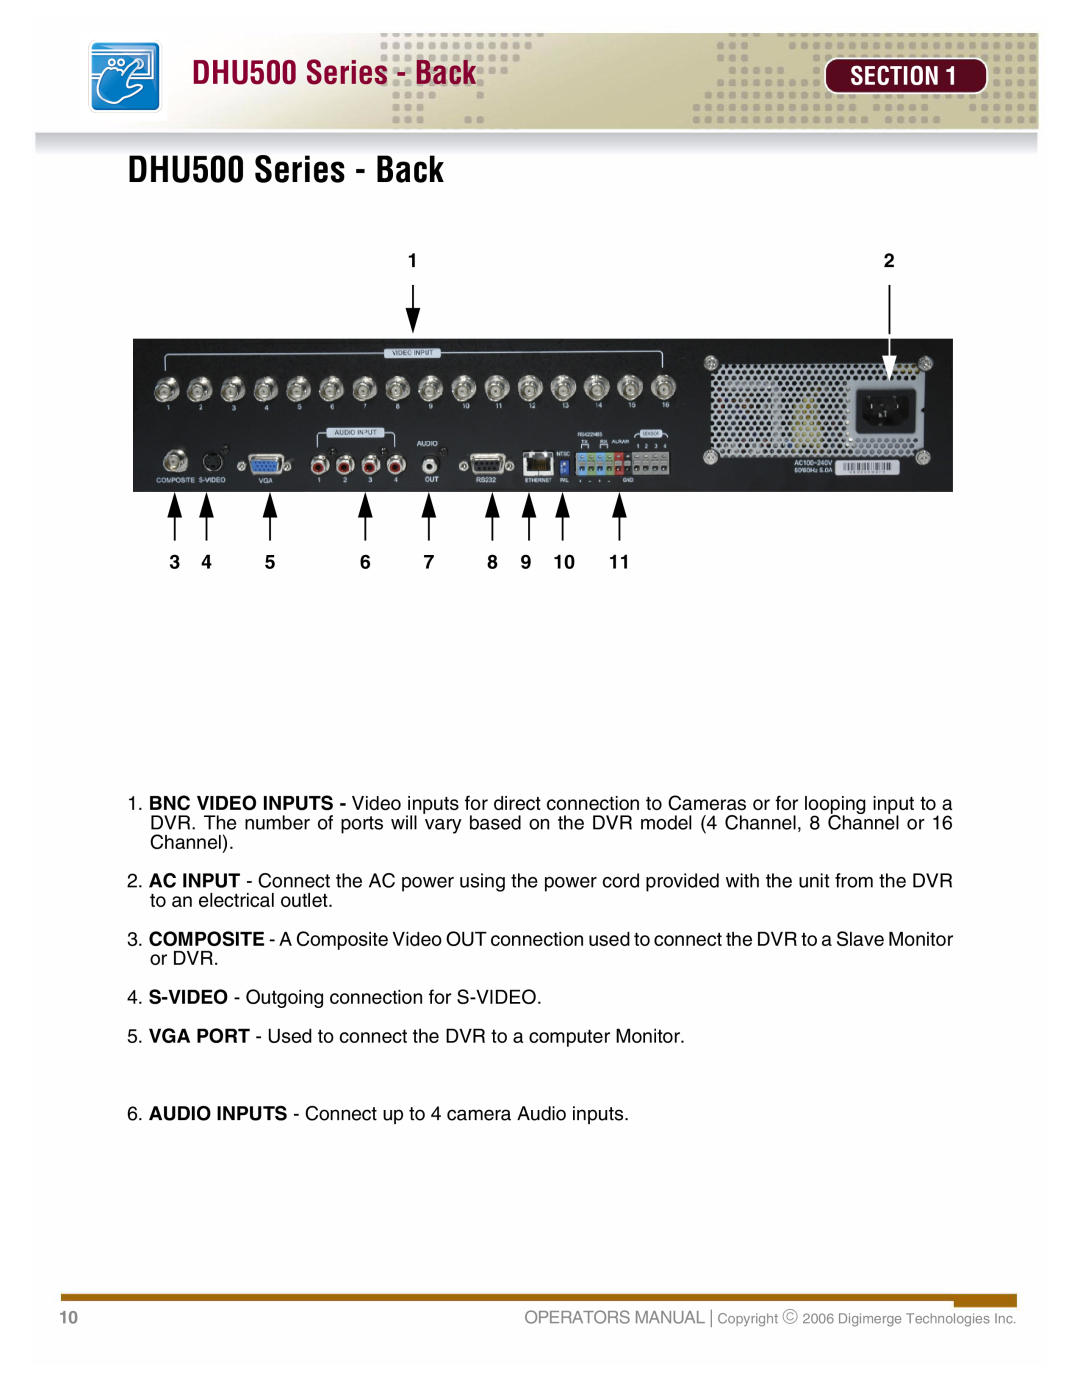 LOREX Technology manual DHU500 Series - Back, Section 